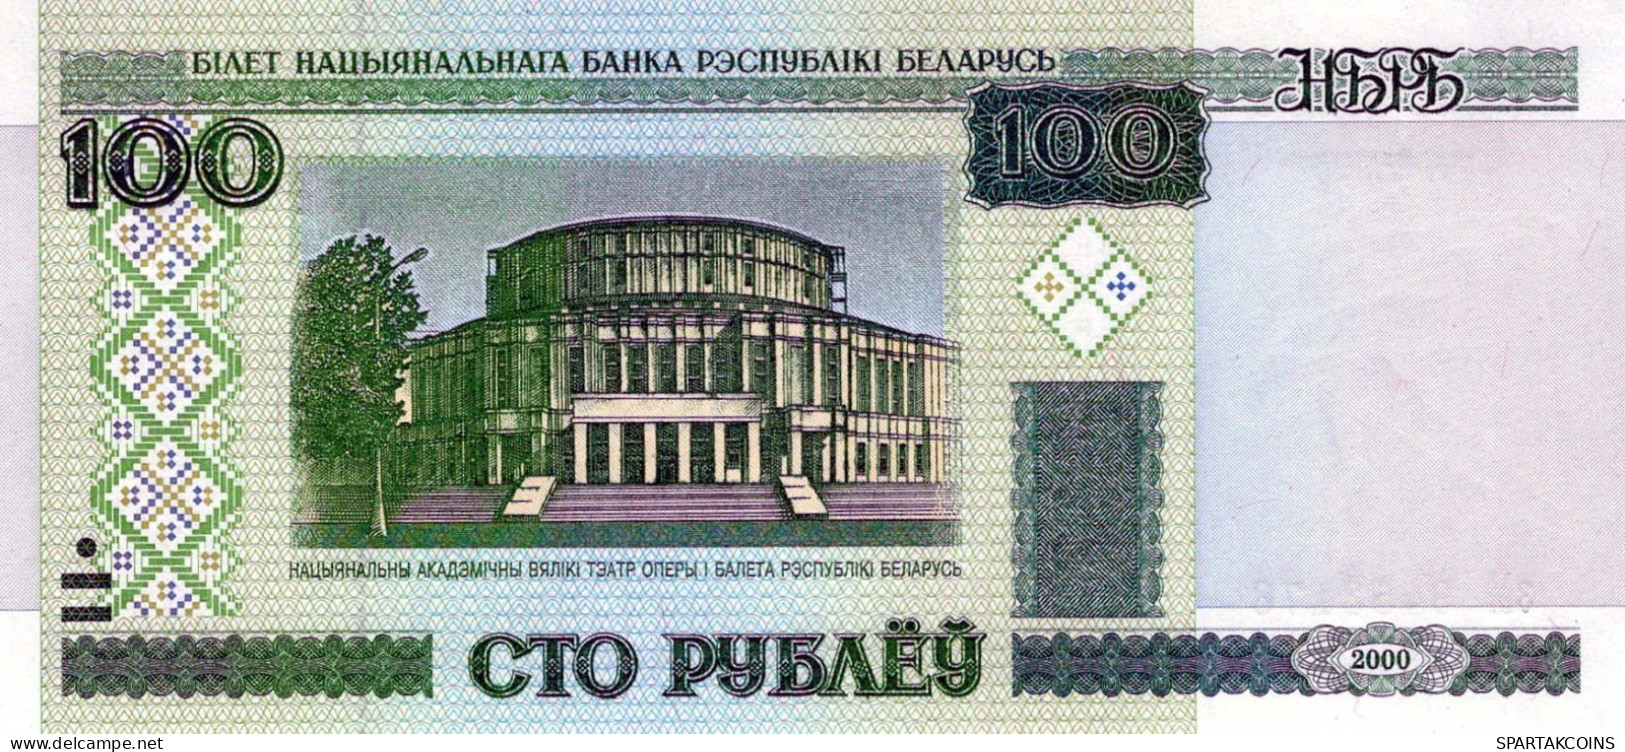 100 RUBLES 2000 BELARUS Papiergeld Banknote #PJ306 - [11] Emisiones Locales